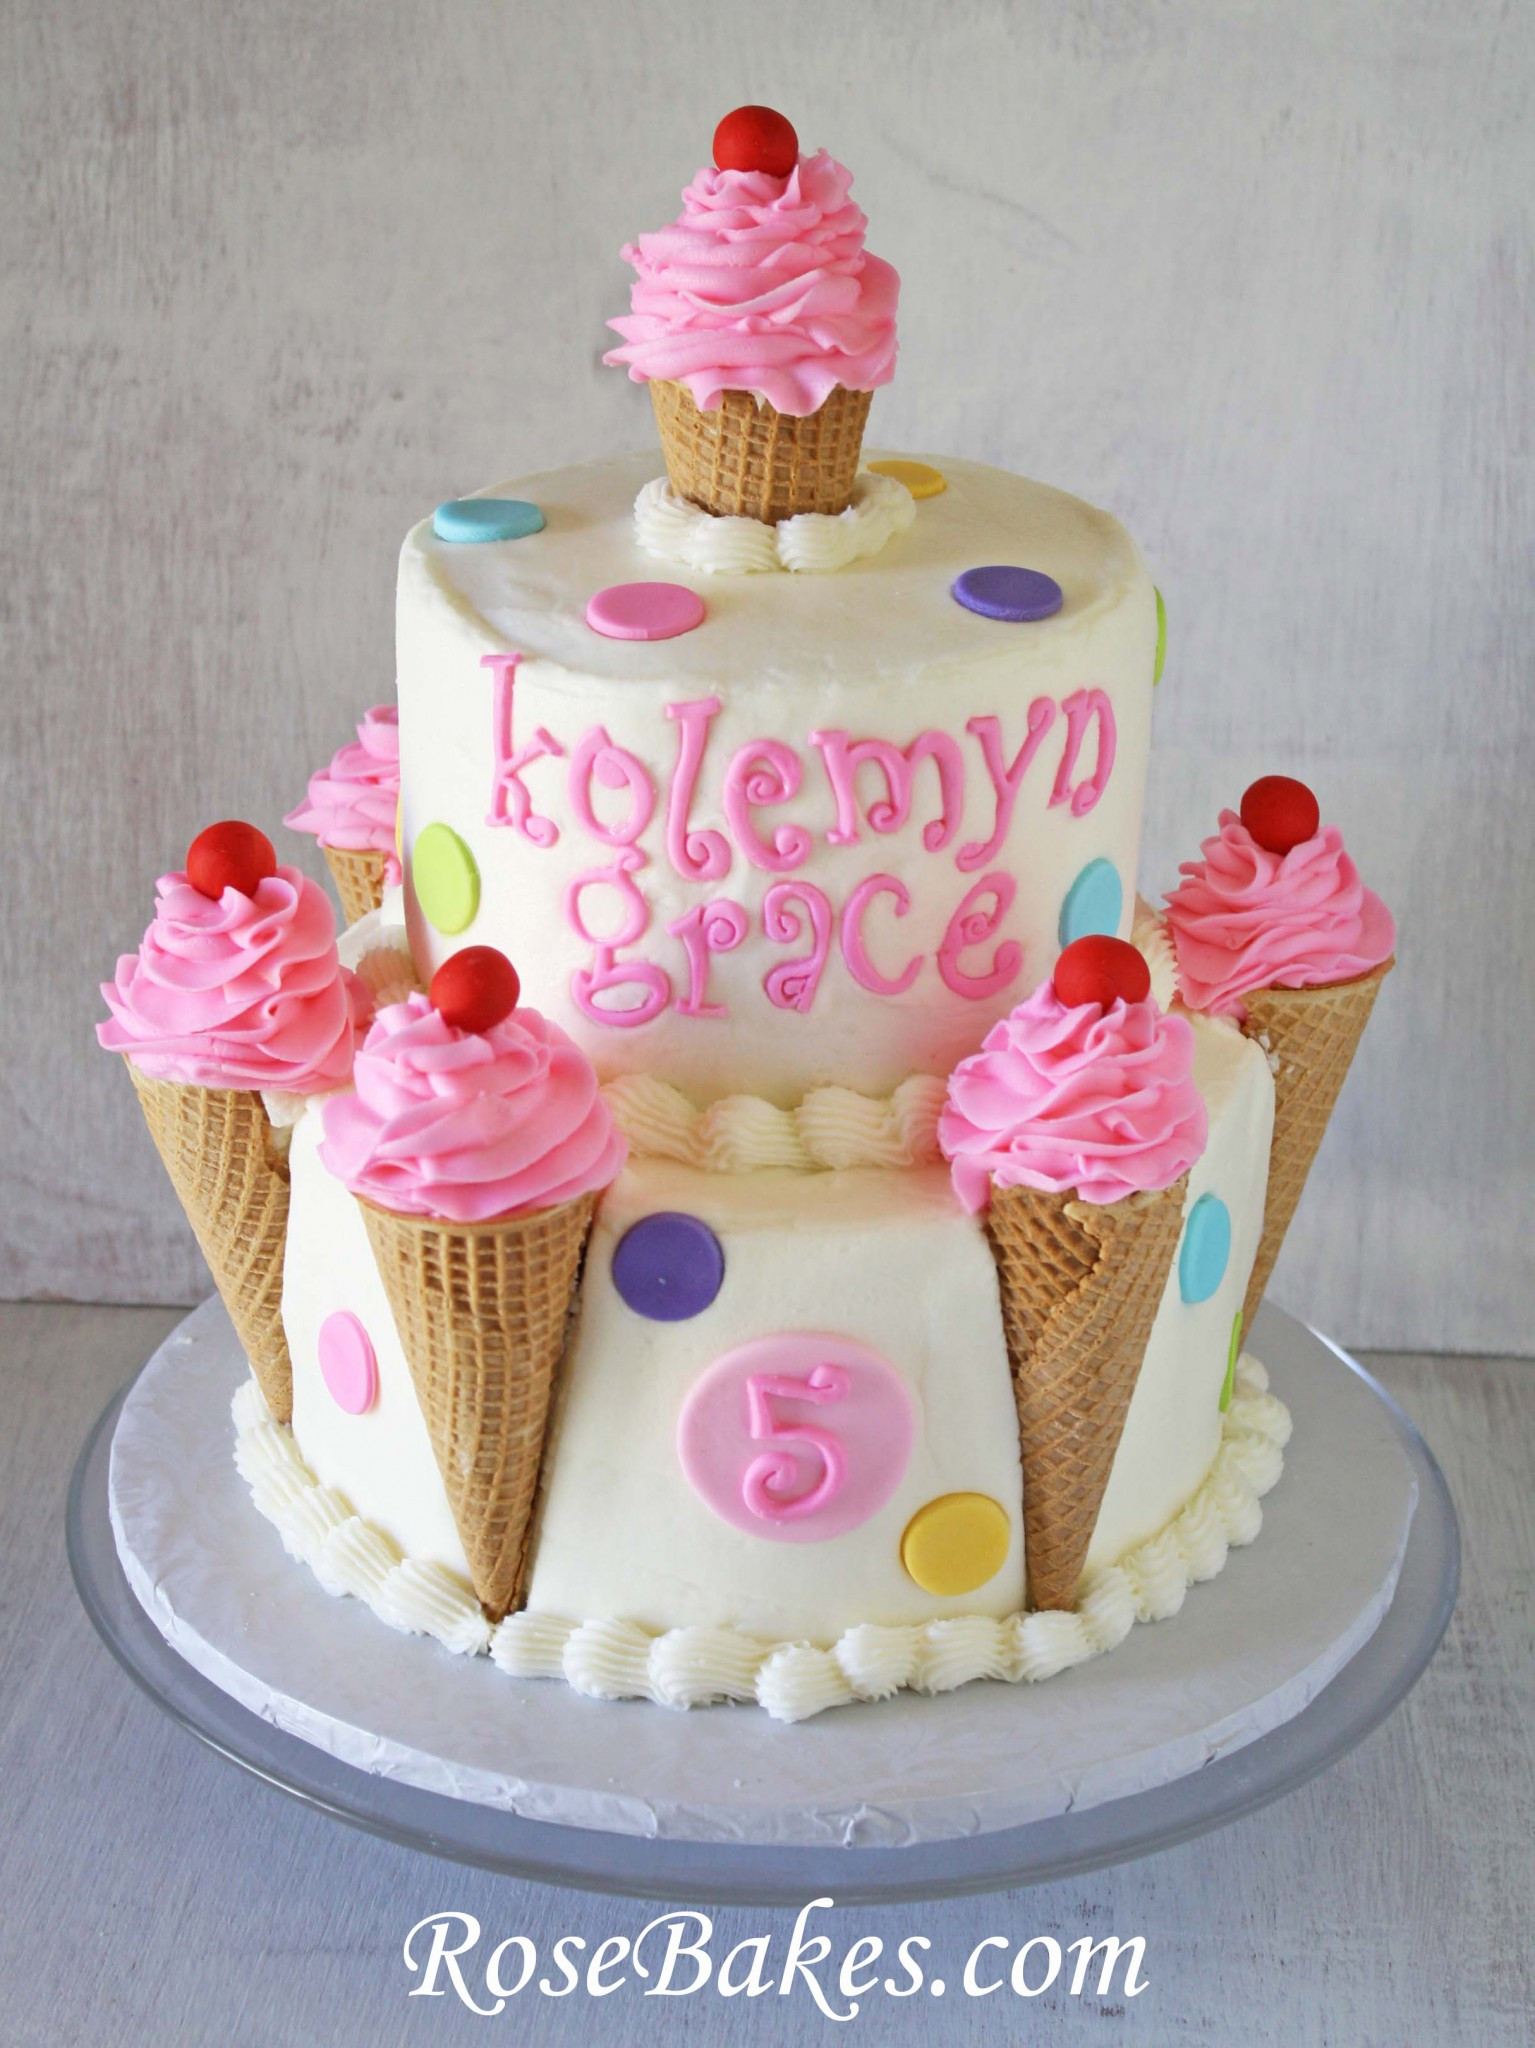 Best ideas about Ice Cream Birthday Cake
. Save or Pin Ice Cream Cones Birthday Cake Now.